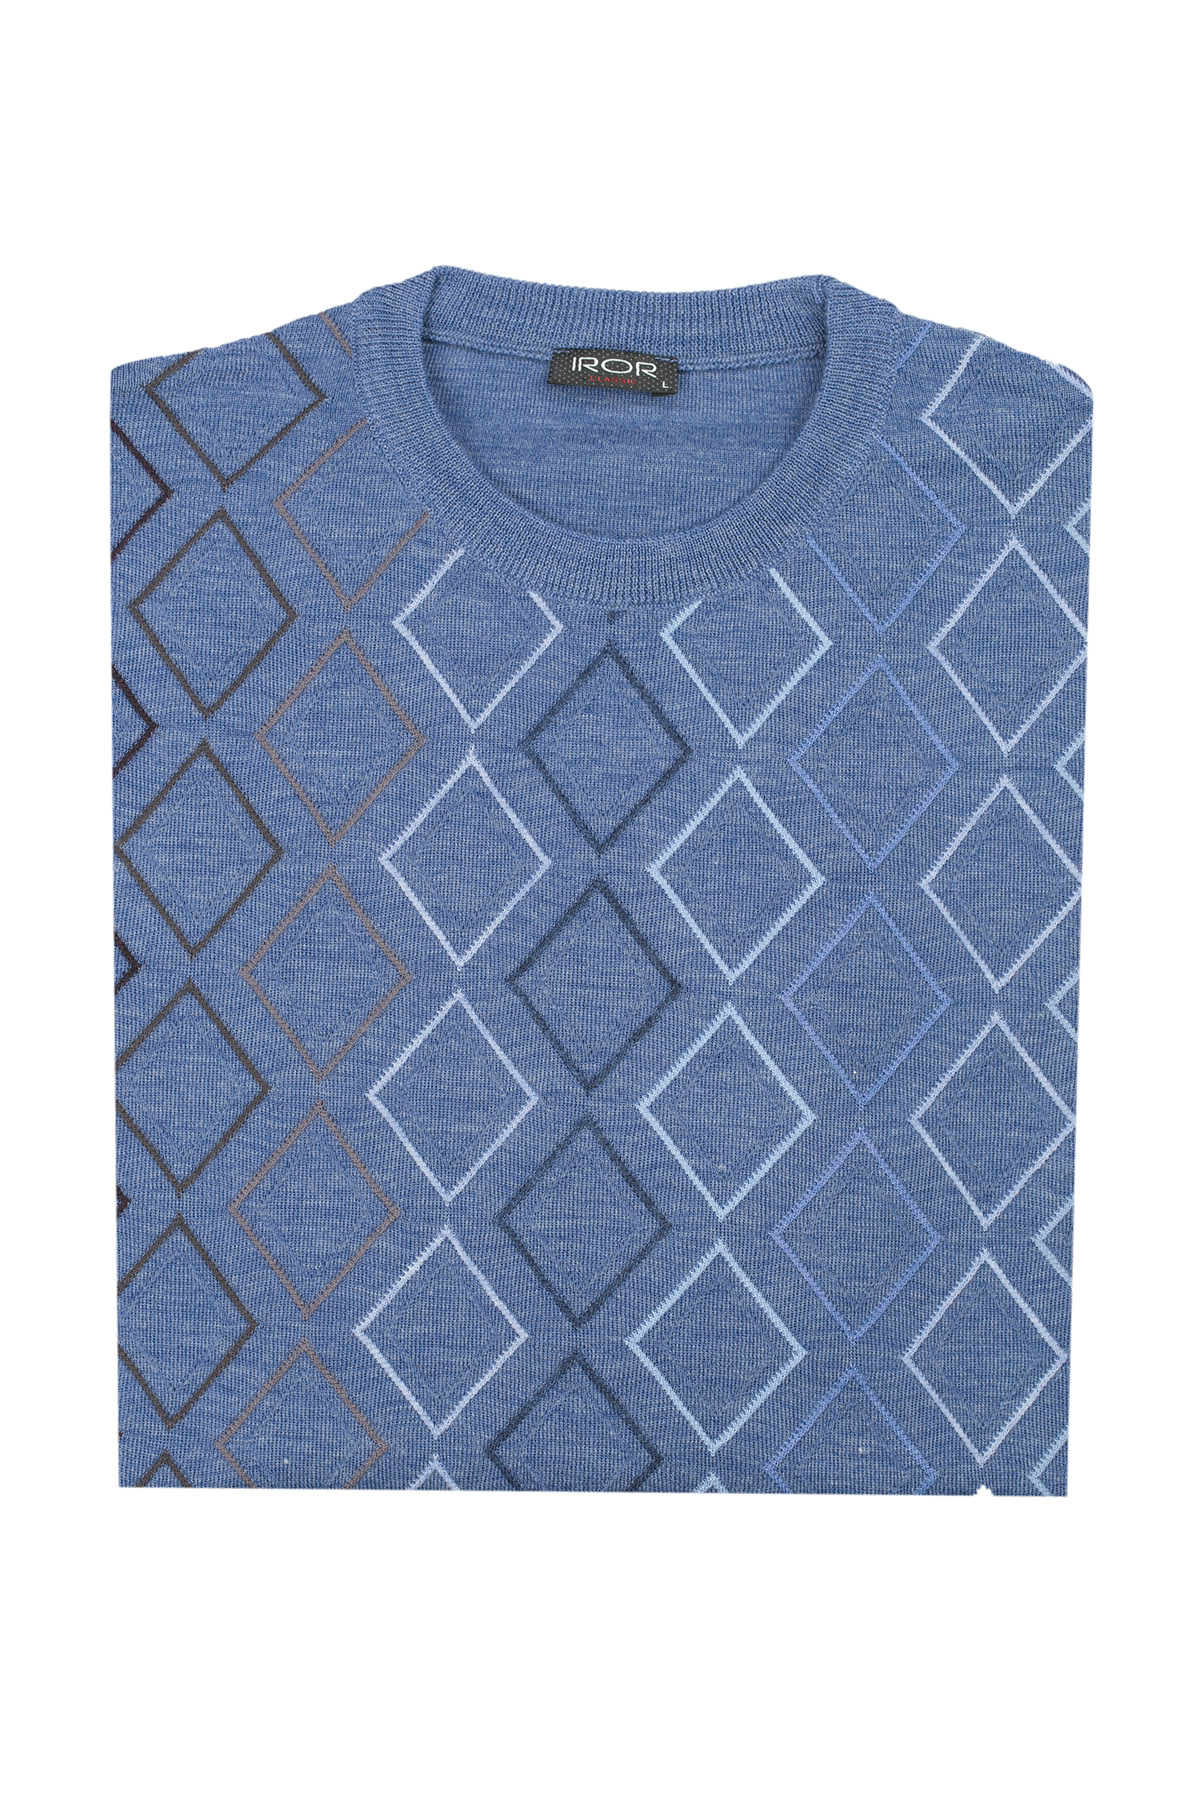 IROR – Sweater Pack (M-L-XL-2XL) 8024-01 – IROR